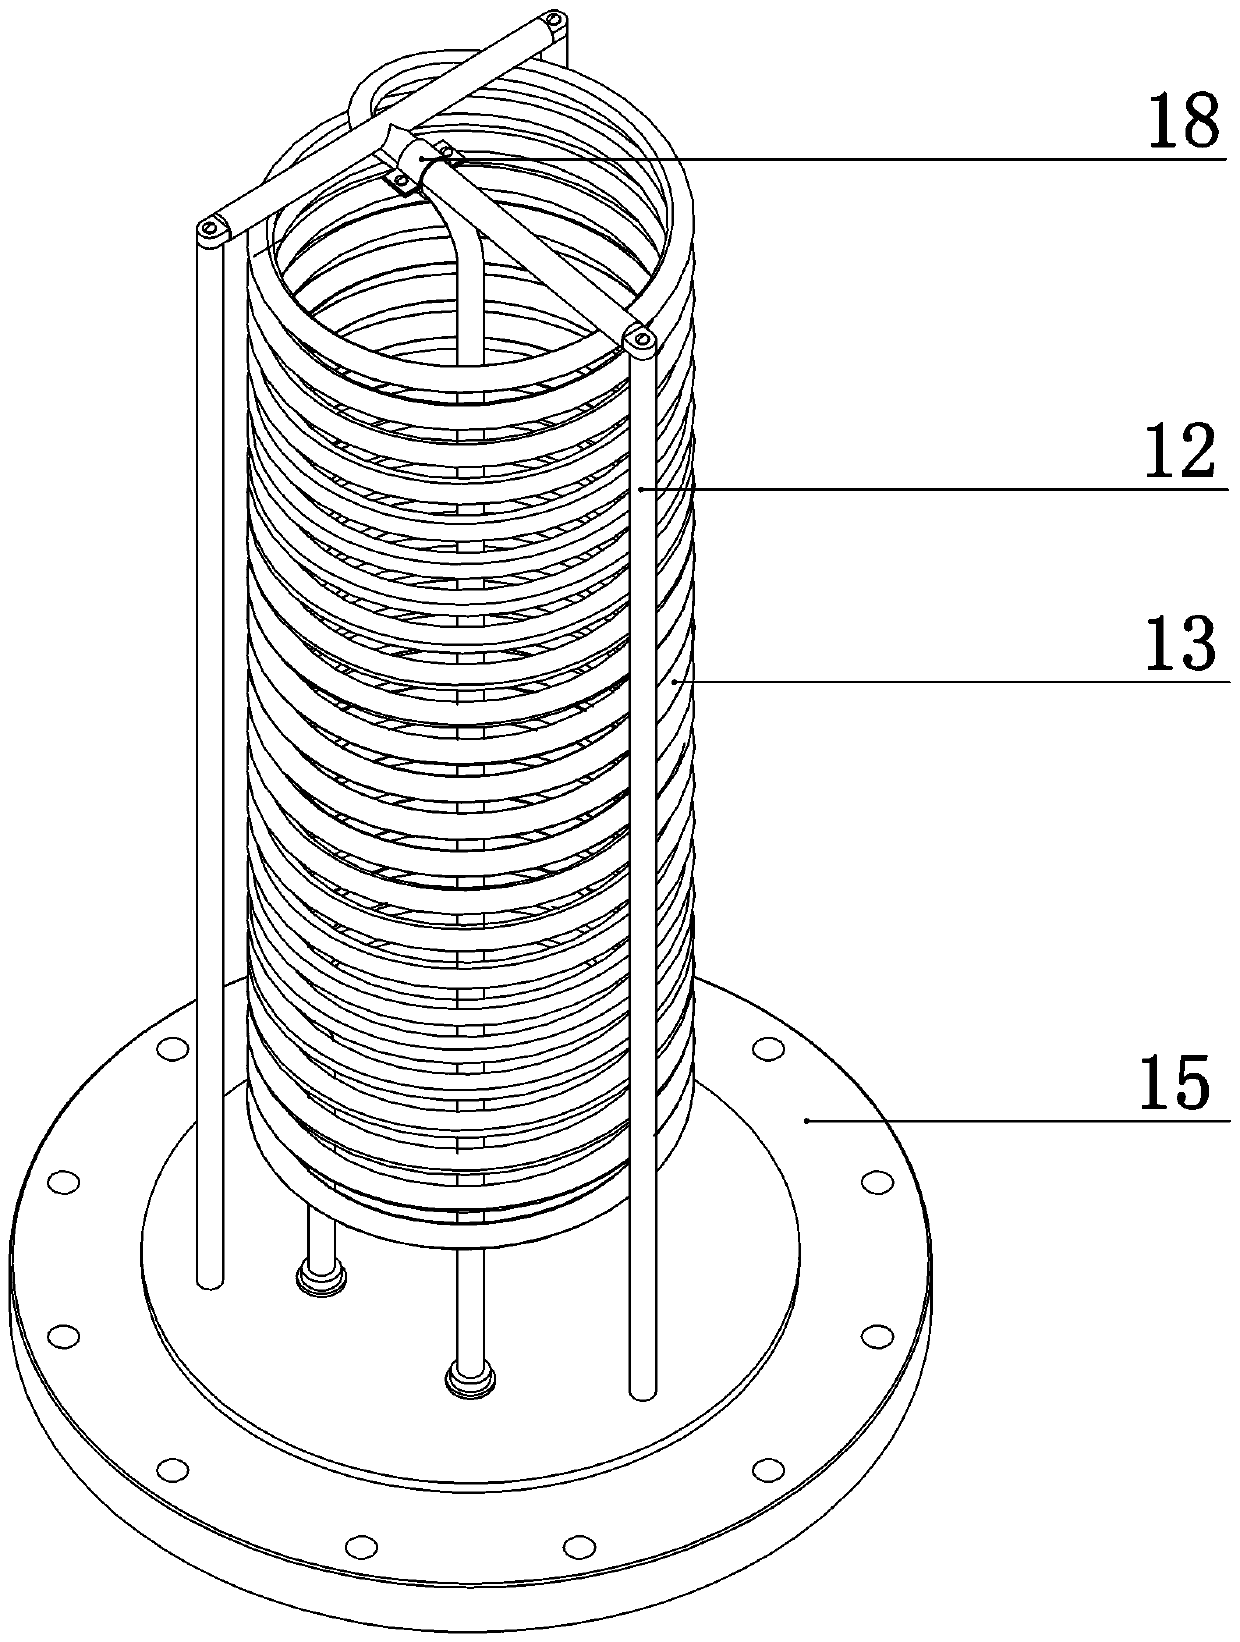 Manufacturing method of graphene heating tube pressurized hot water equipment, hot water equipment, and air coating equipment